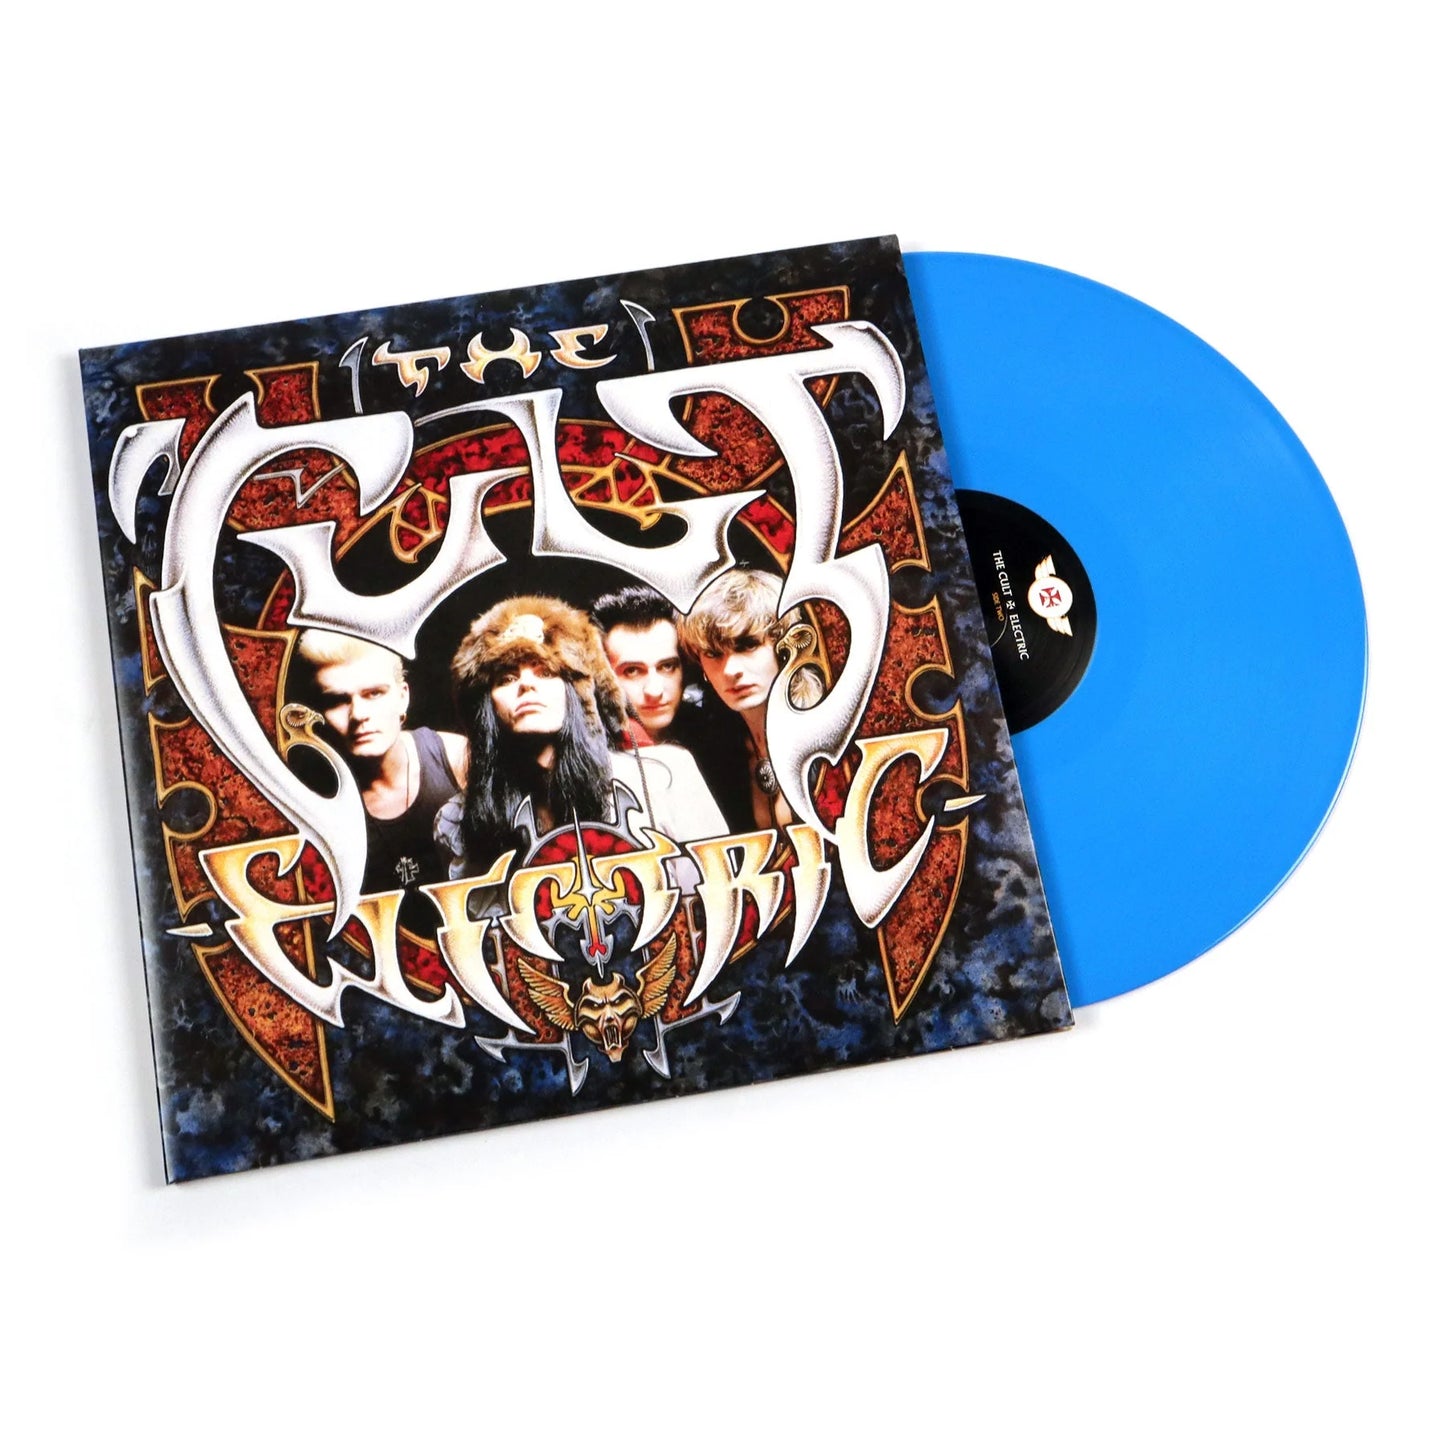 The Cult - Electric - Blue - LP